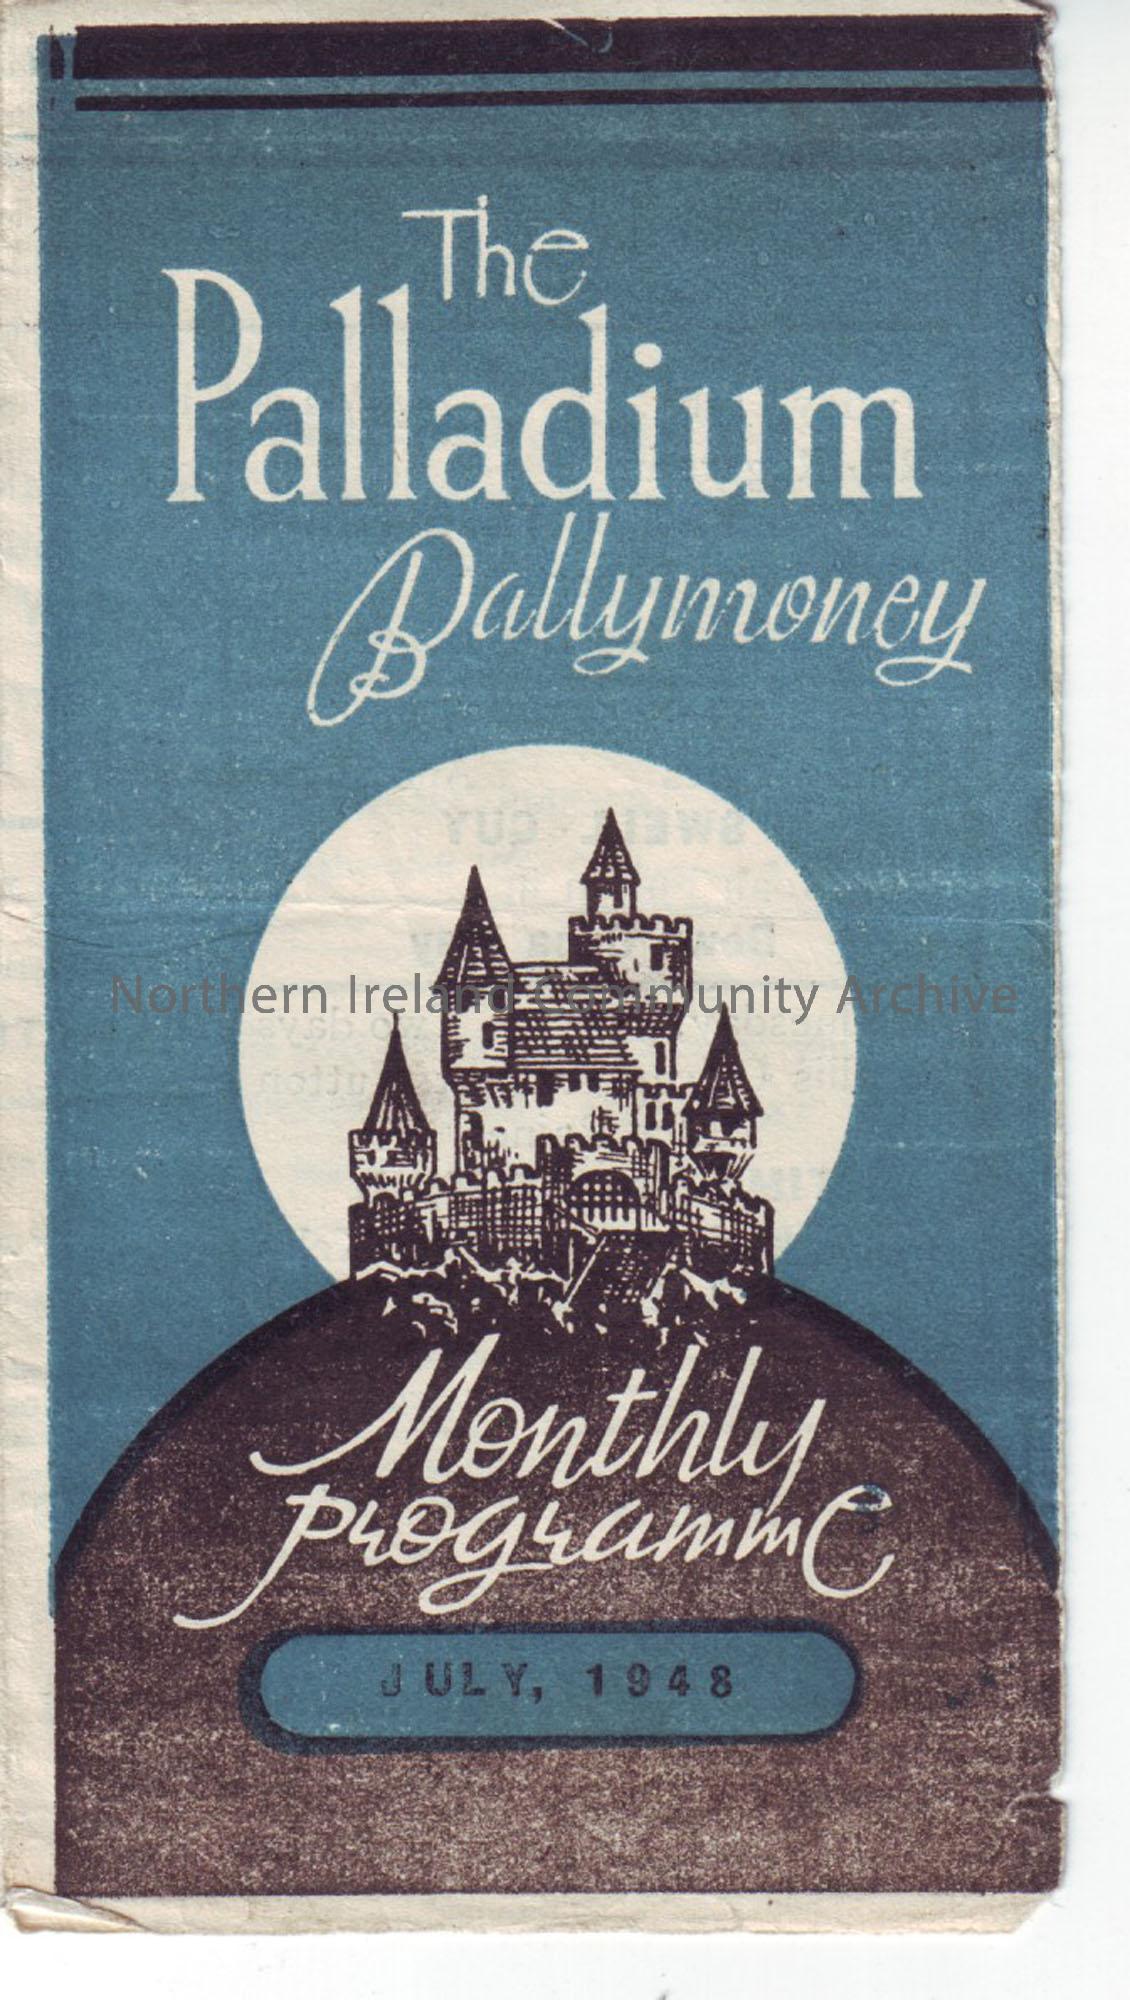 blue monthly programme for Ballymoney Palladium cinema- July 1948